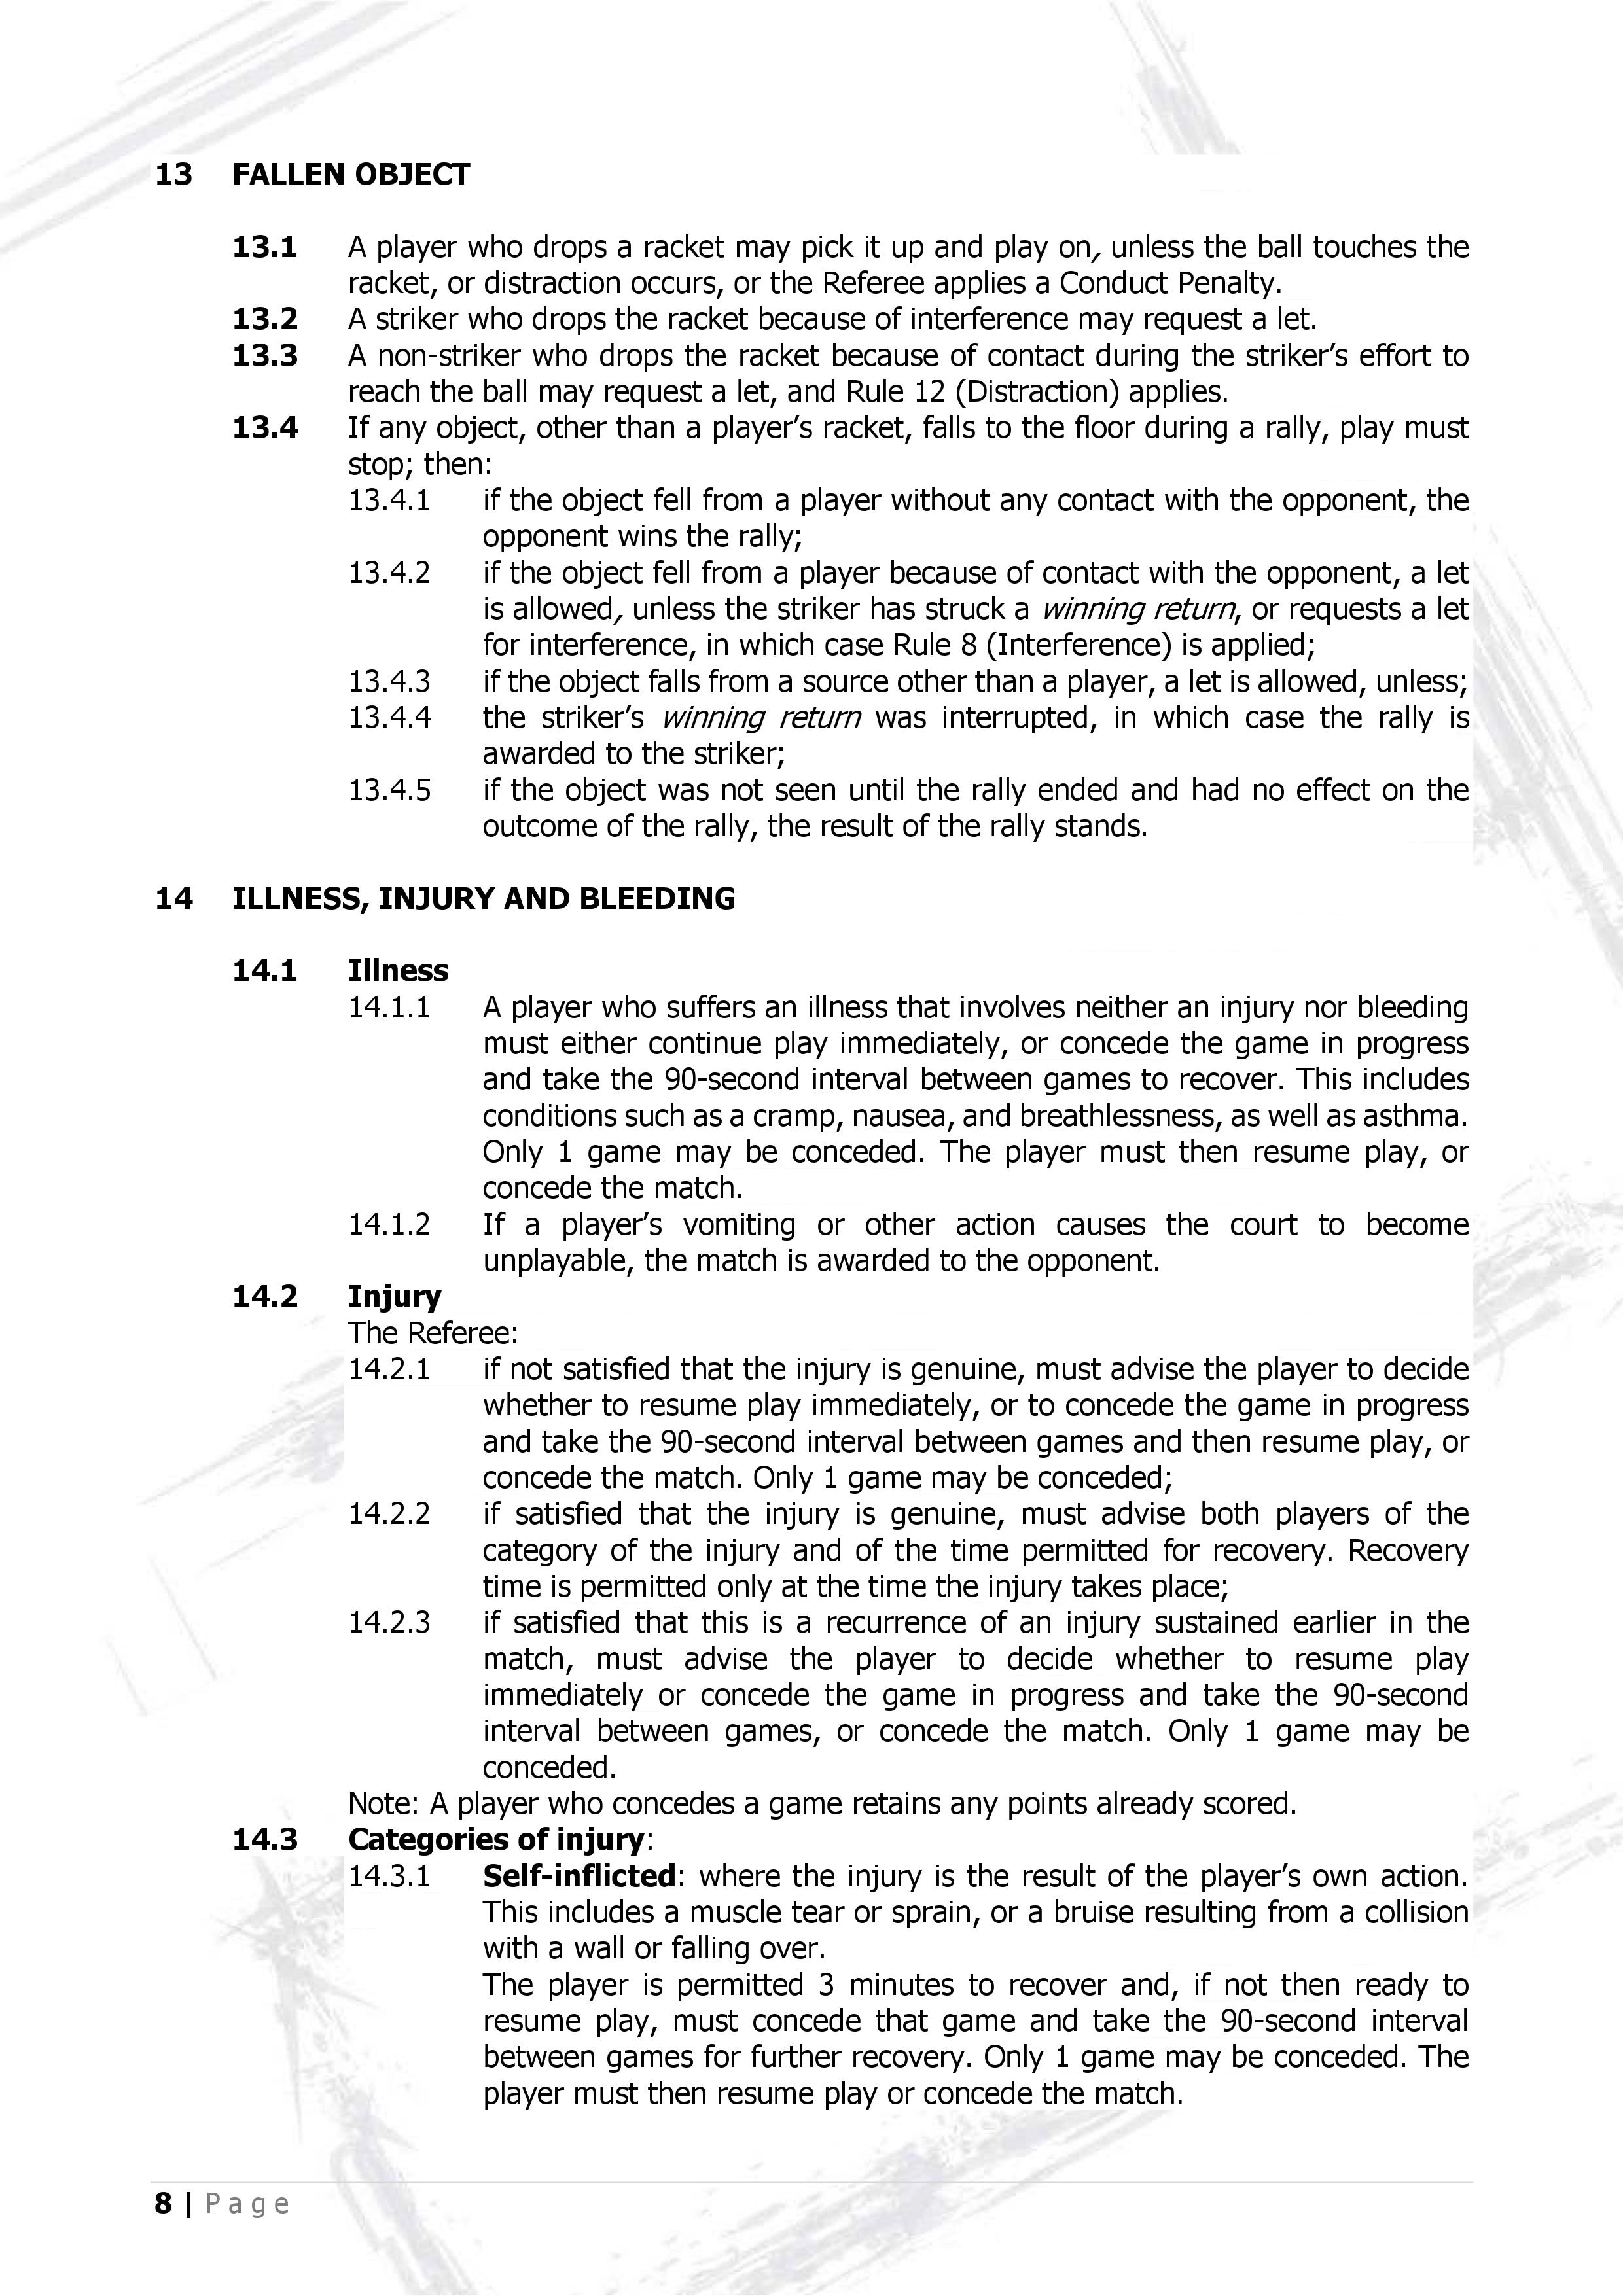 World Squash Federation Rules - Global Squash Coach - Page 10.jpg